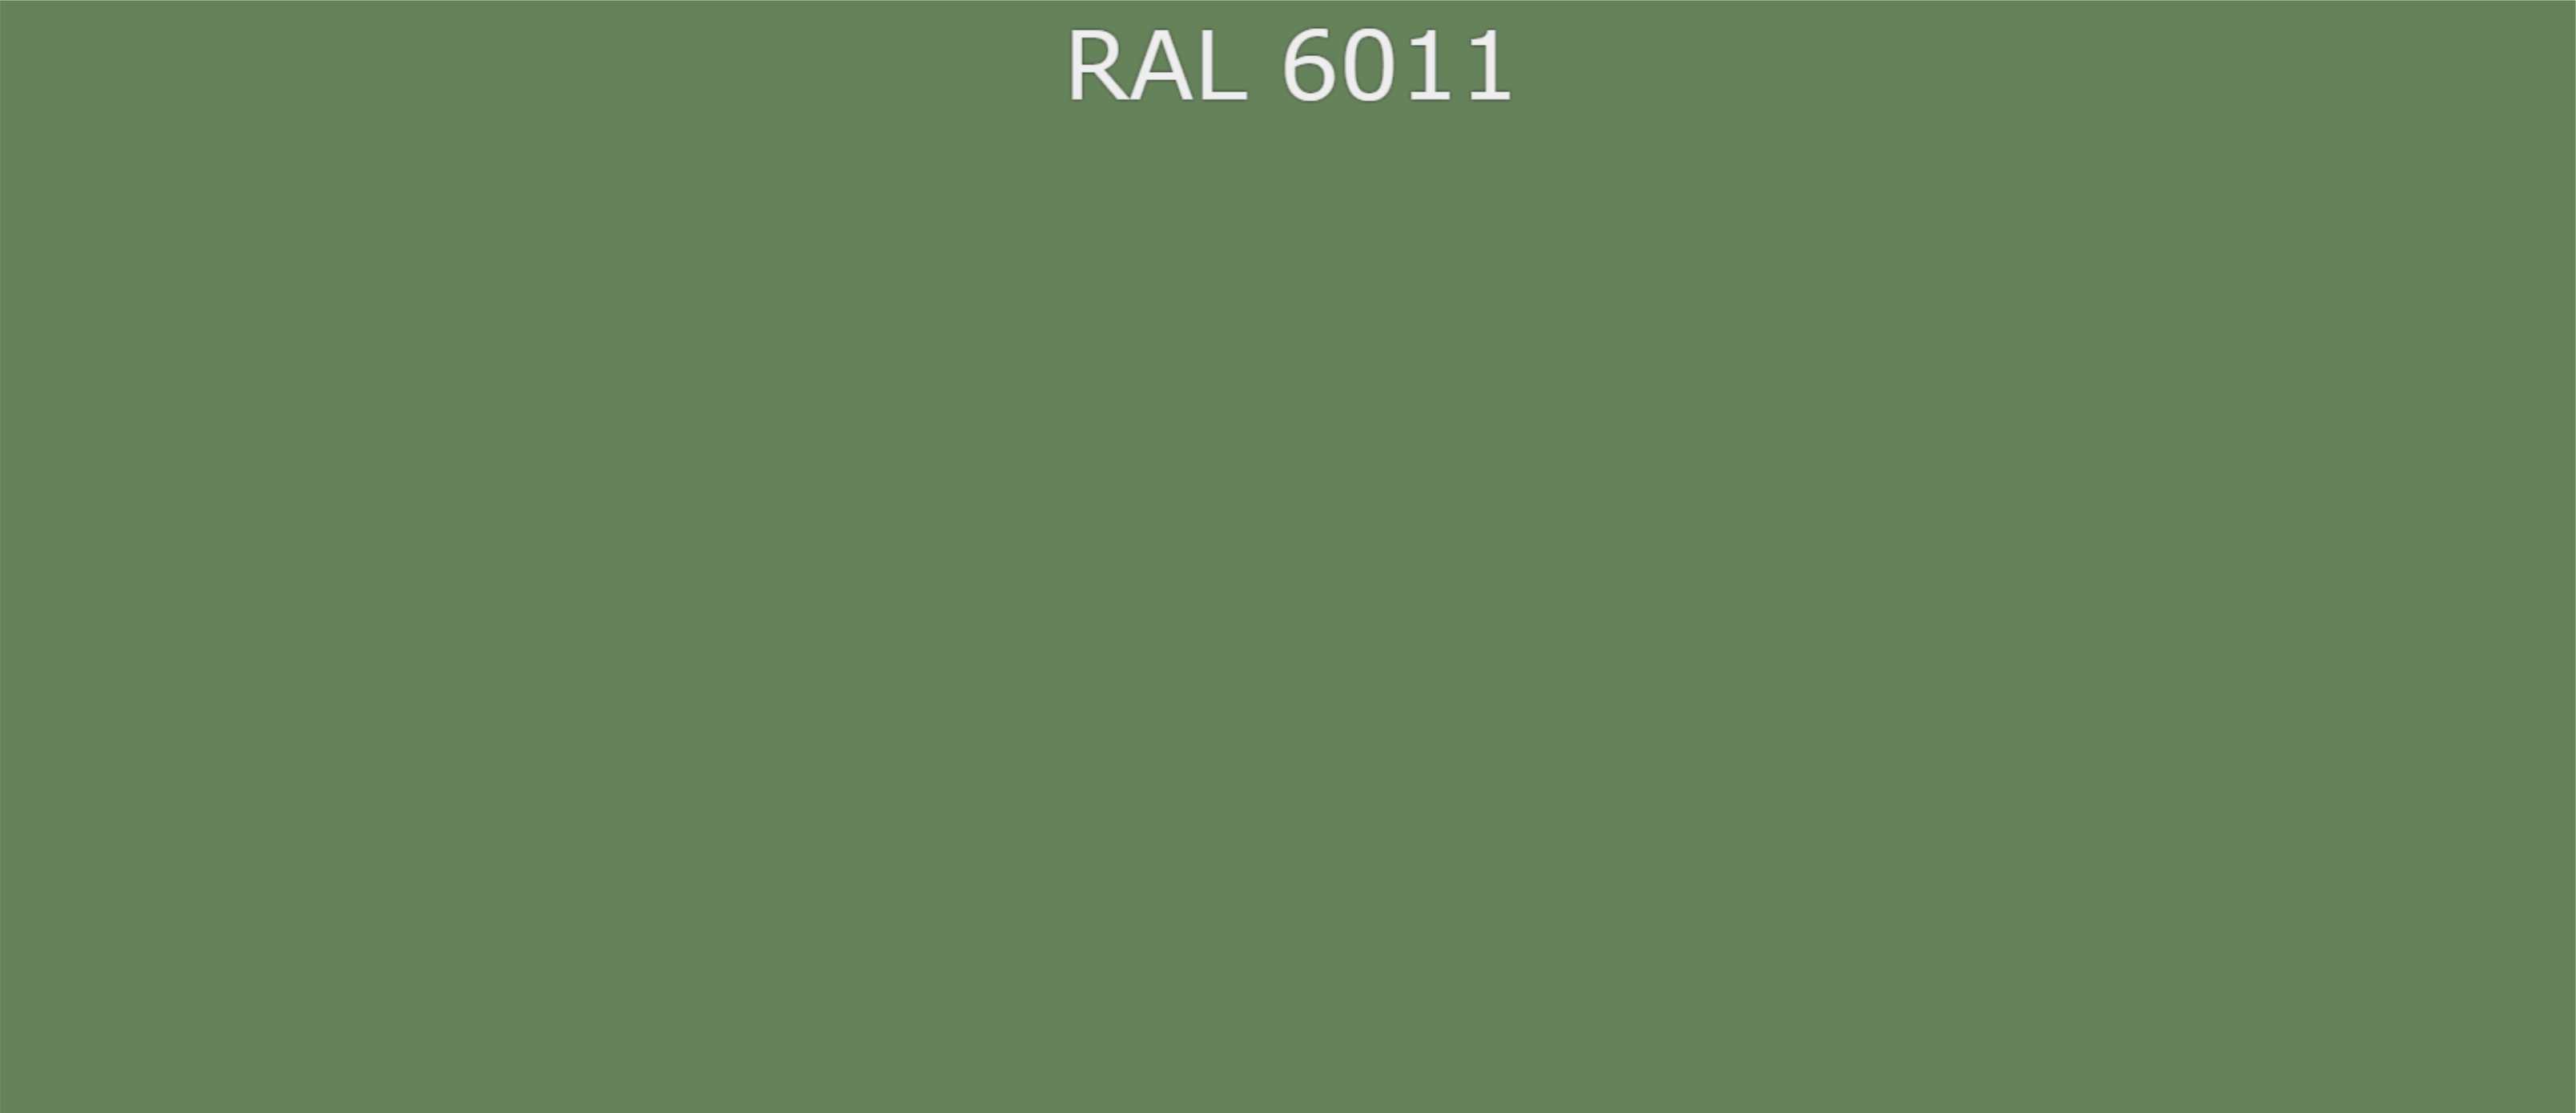 Цвет резеды. RAL 6011 цвет. RAL 6011 краска. Палитра RAL 6011 Резедово зеленый. RAL 6011 Резедово-зелёный.